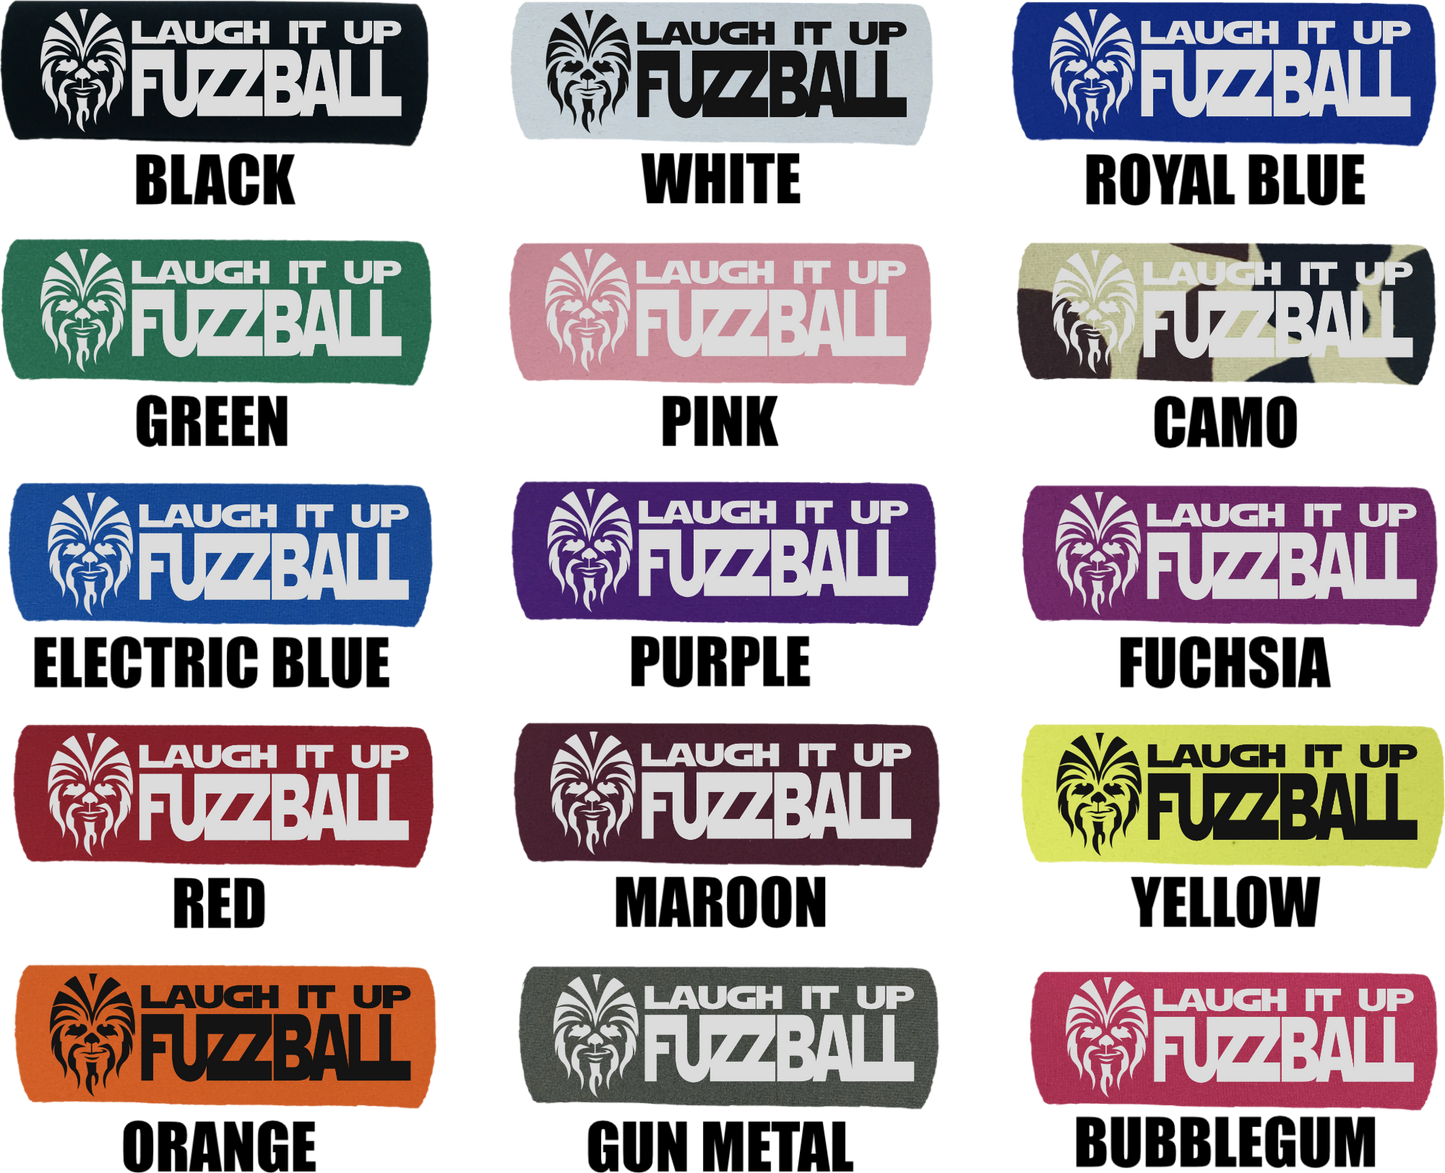 The Fuzzball Grip. - BEST GRIPS. EVER.®